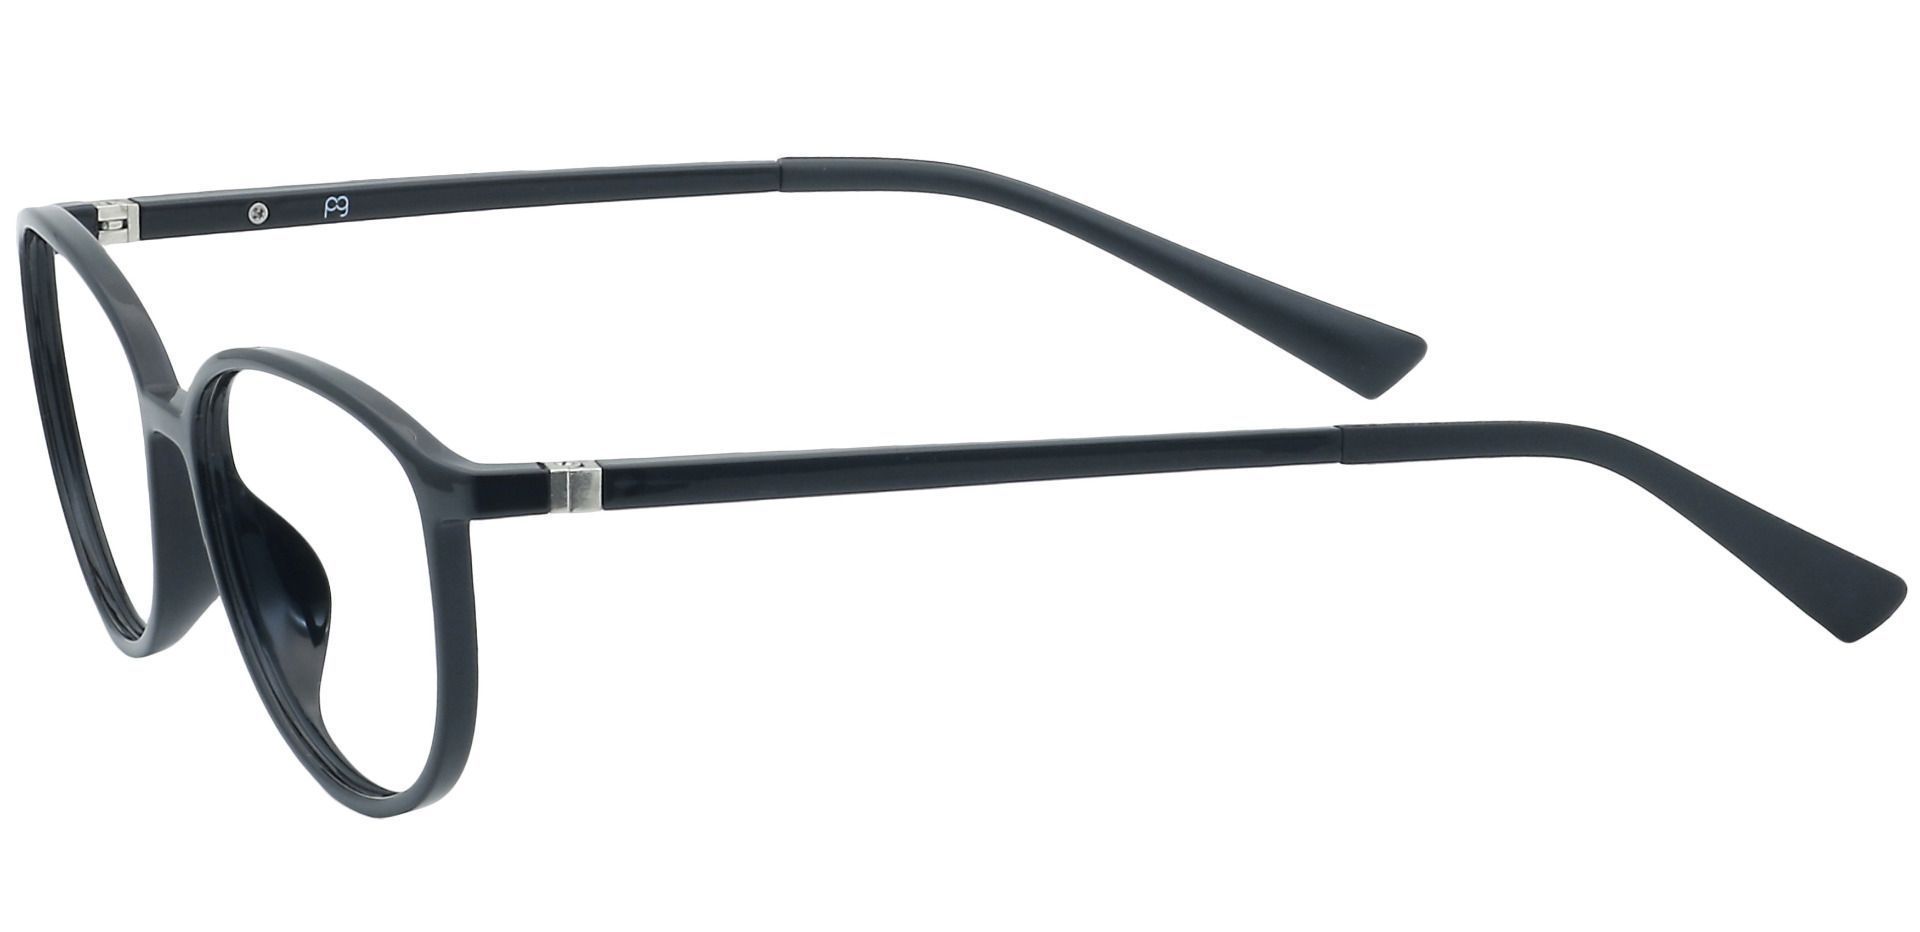 Melbourne Oval Progressive Glasses - Black